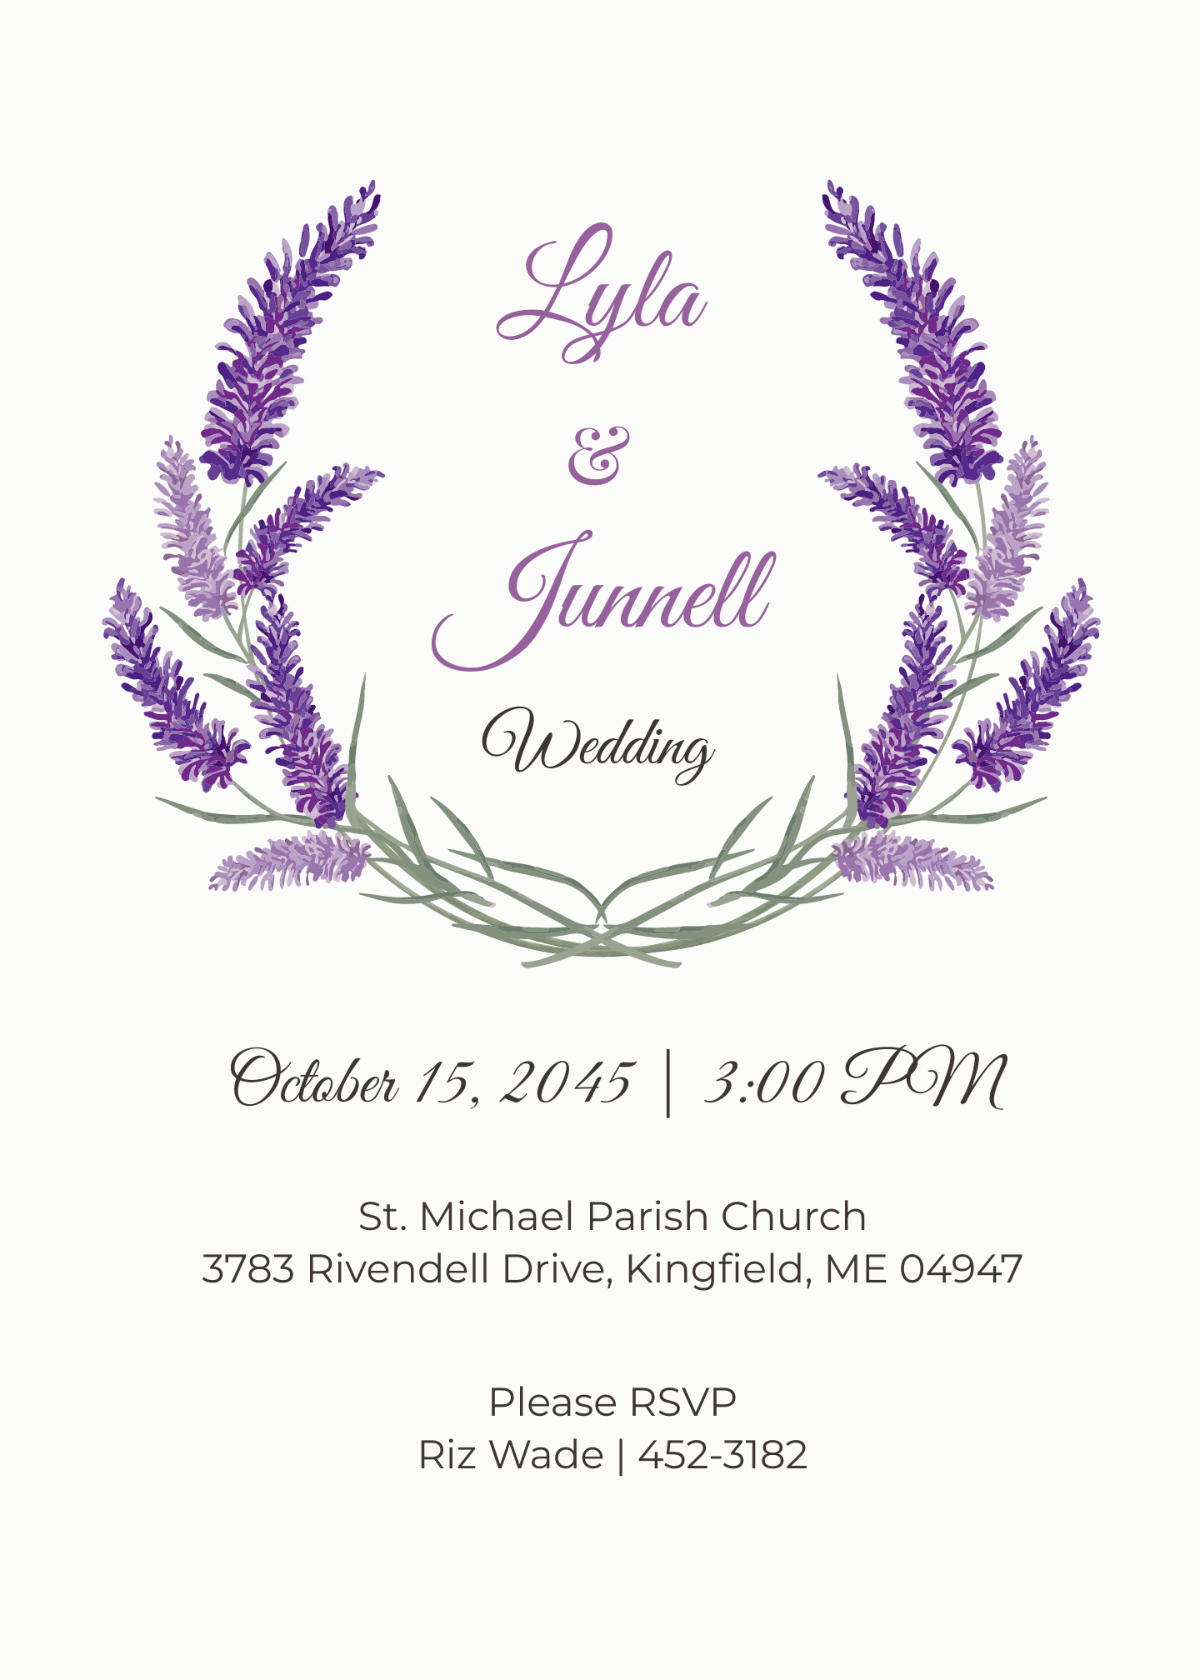 Lavender Wedding Invitation Template